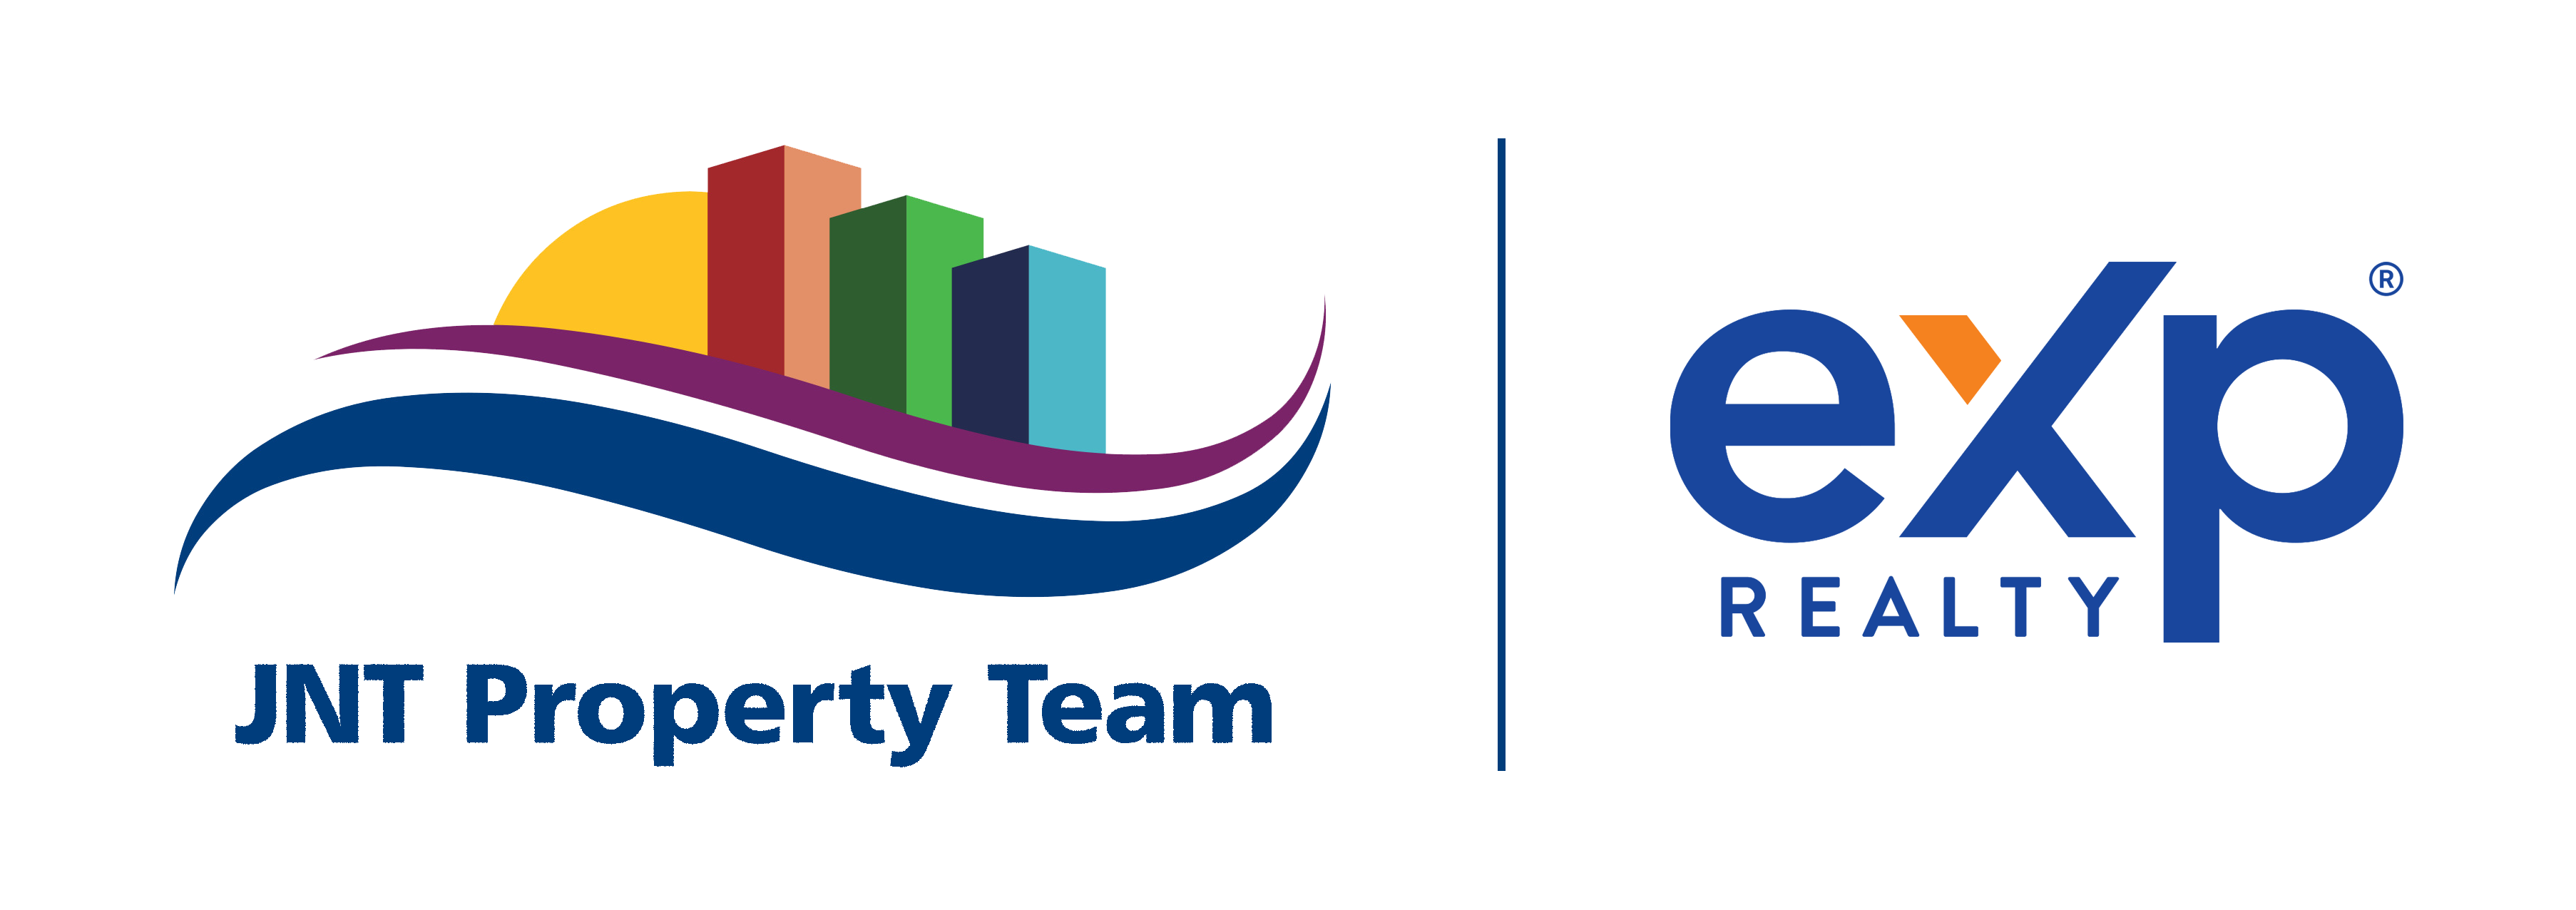 JNT Property Team logo